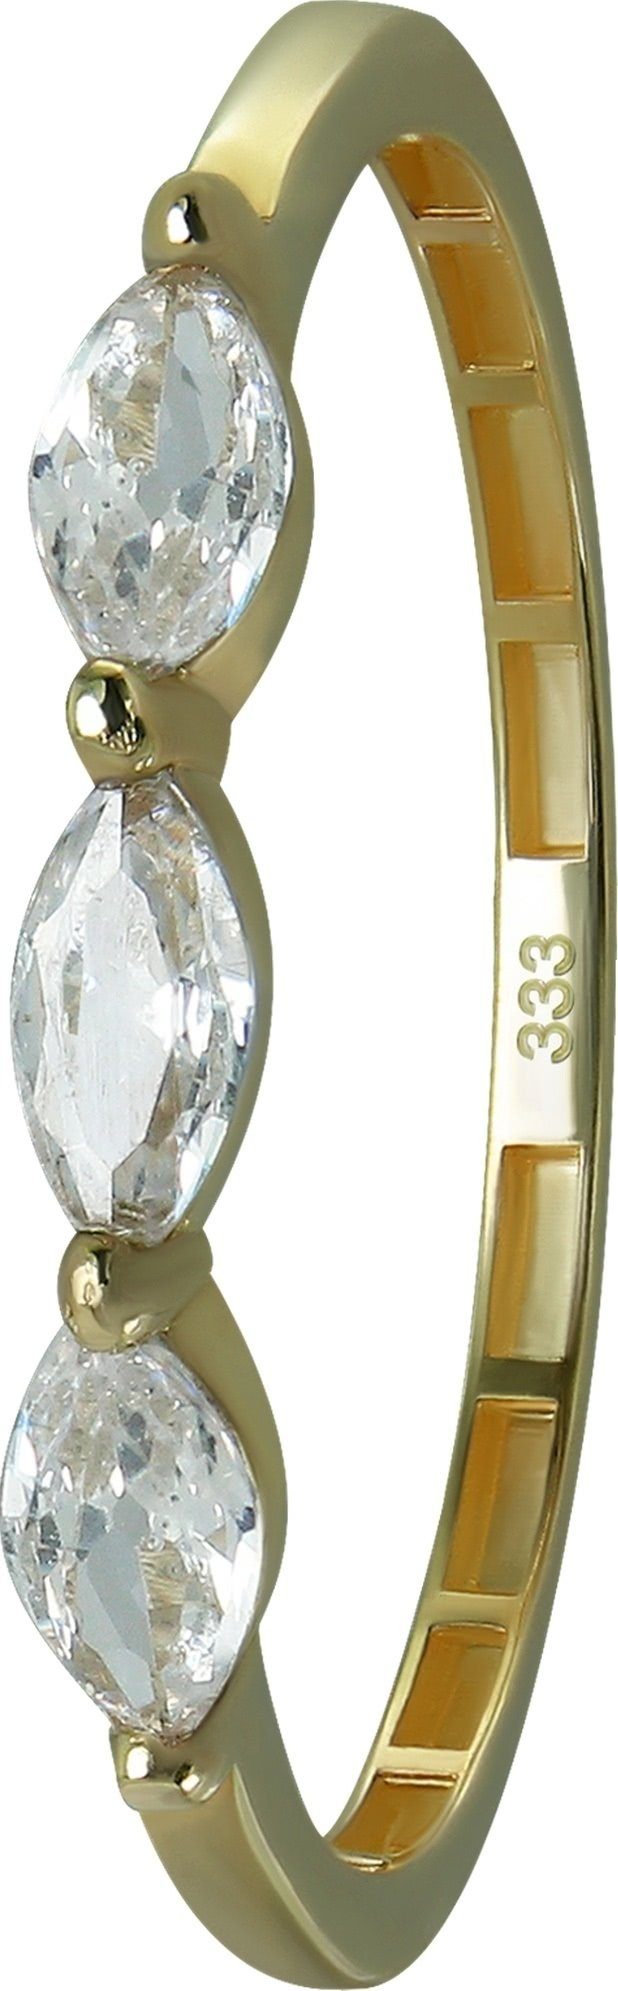 GoldDream Goldring GoldDream Gold Ring Shine Gr.56 Zirkonia (Fingerring), Damen Ring Shine 333 Gelbgold - 8 Karat, Farbe: gold, weiß